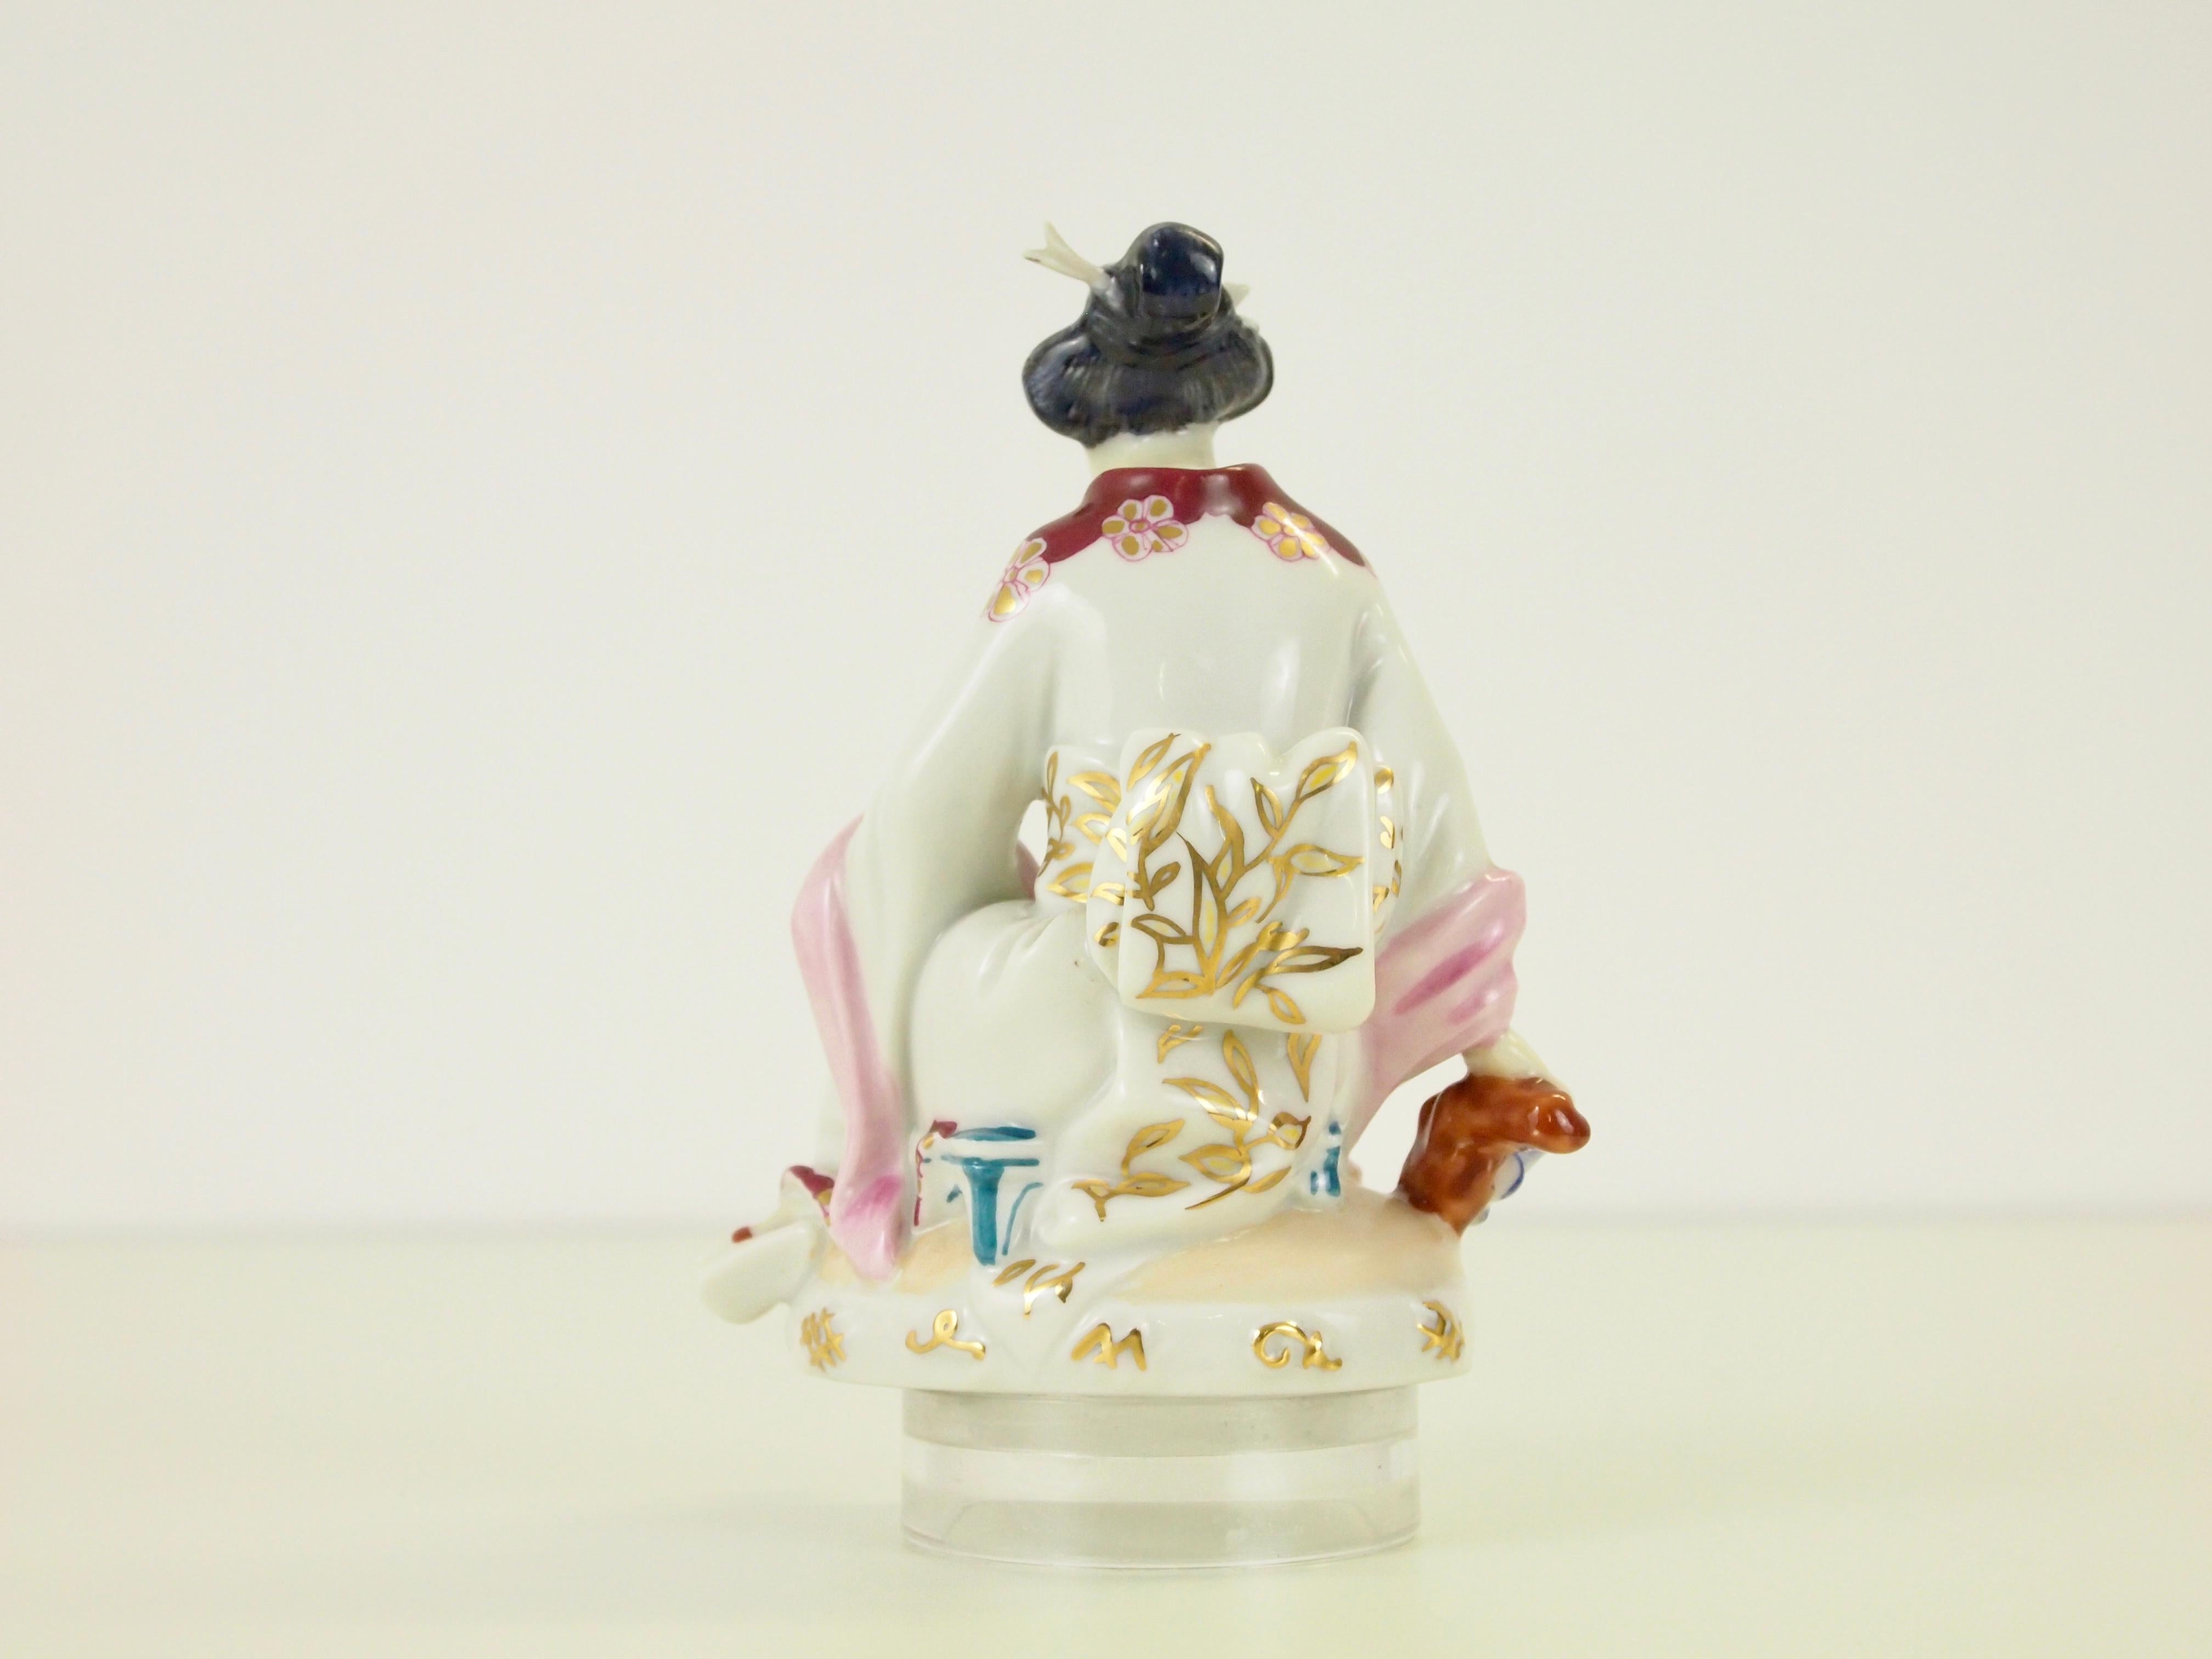 Austrian Augarten Wien Porcelain Figurine Depicting a Chinese Woman by Mathilde Jaksch For Sale